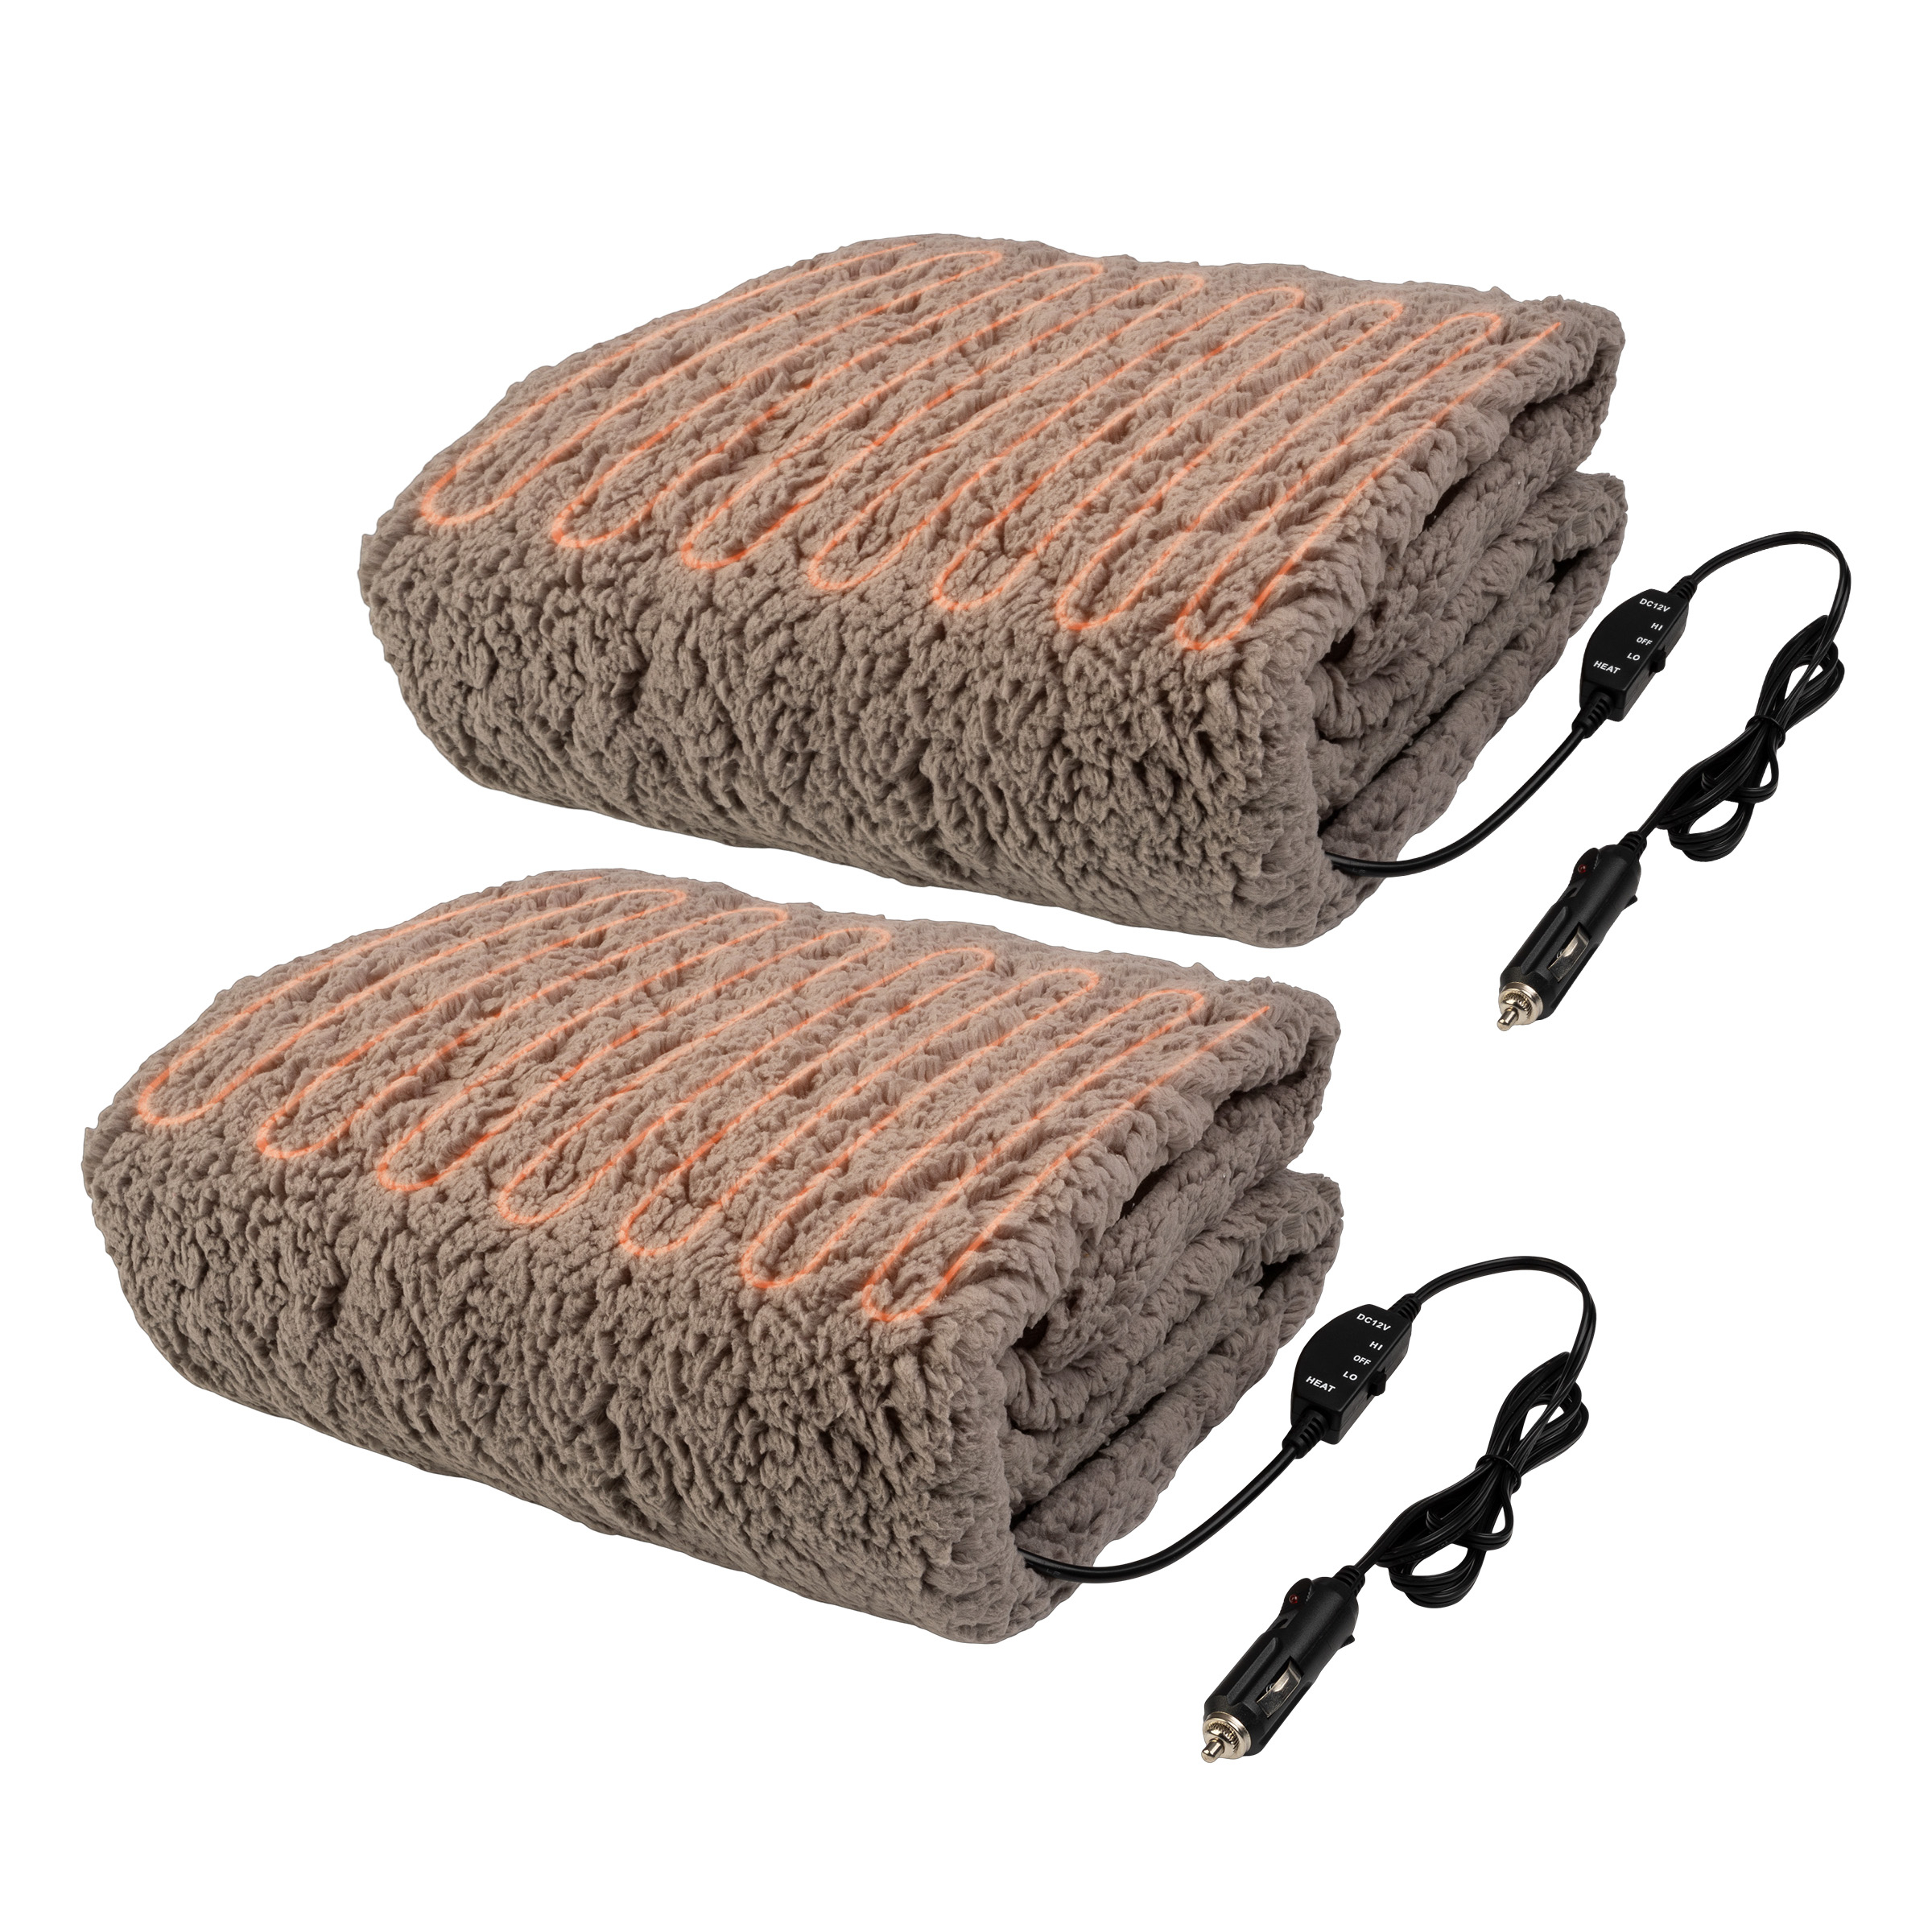 2Pack Heated Blanket Portable 12V Electric Travel Blanket Set For Car Truck RV - Gray